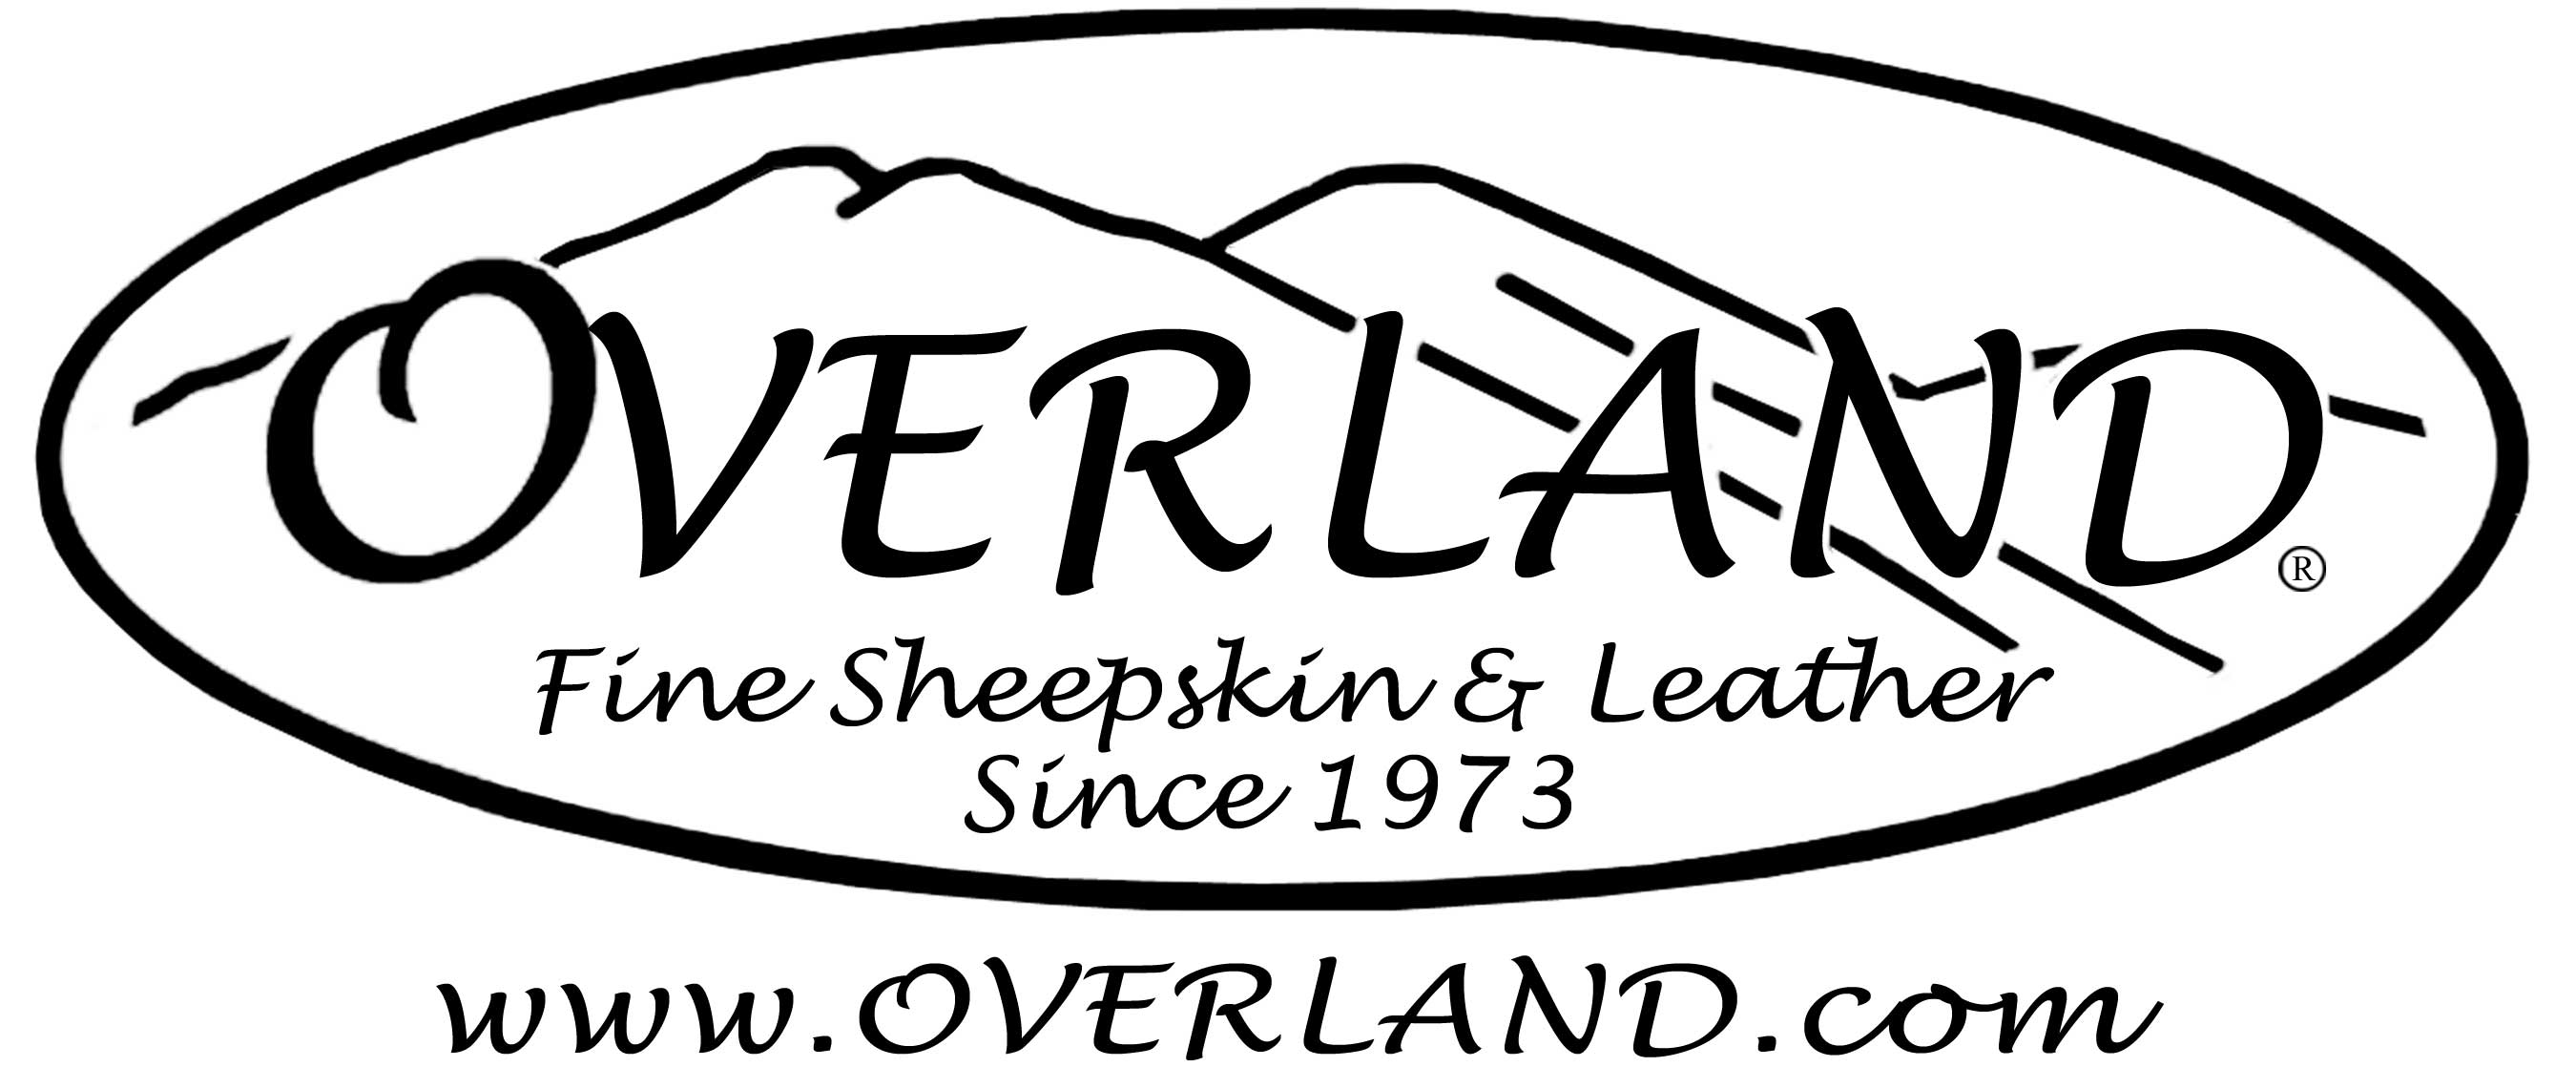 Overland Logo - Overland Logo Outline9inch (2). Genesis At The Crossroads